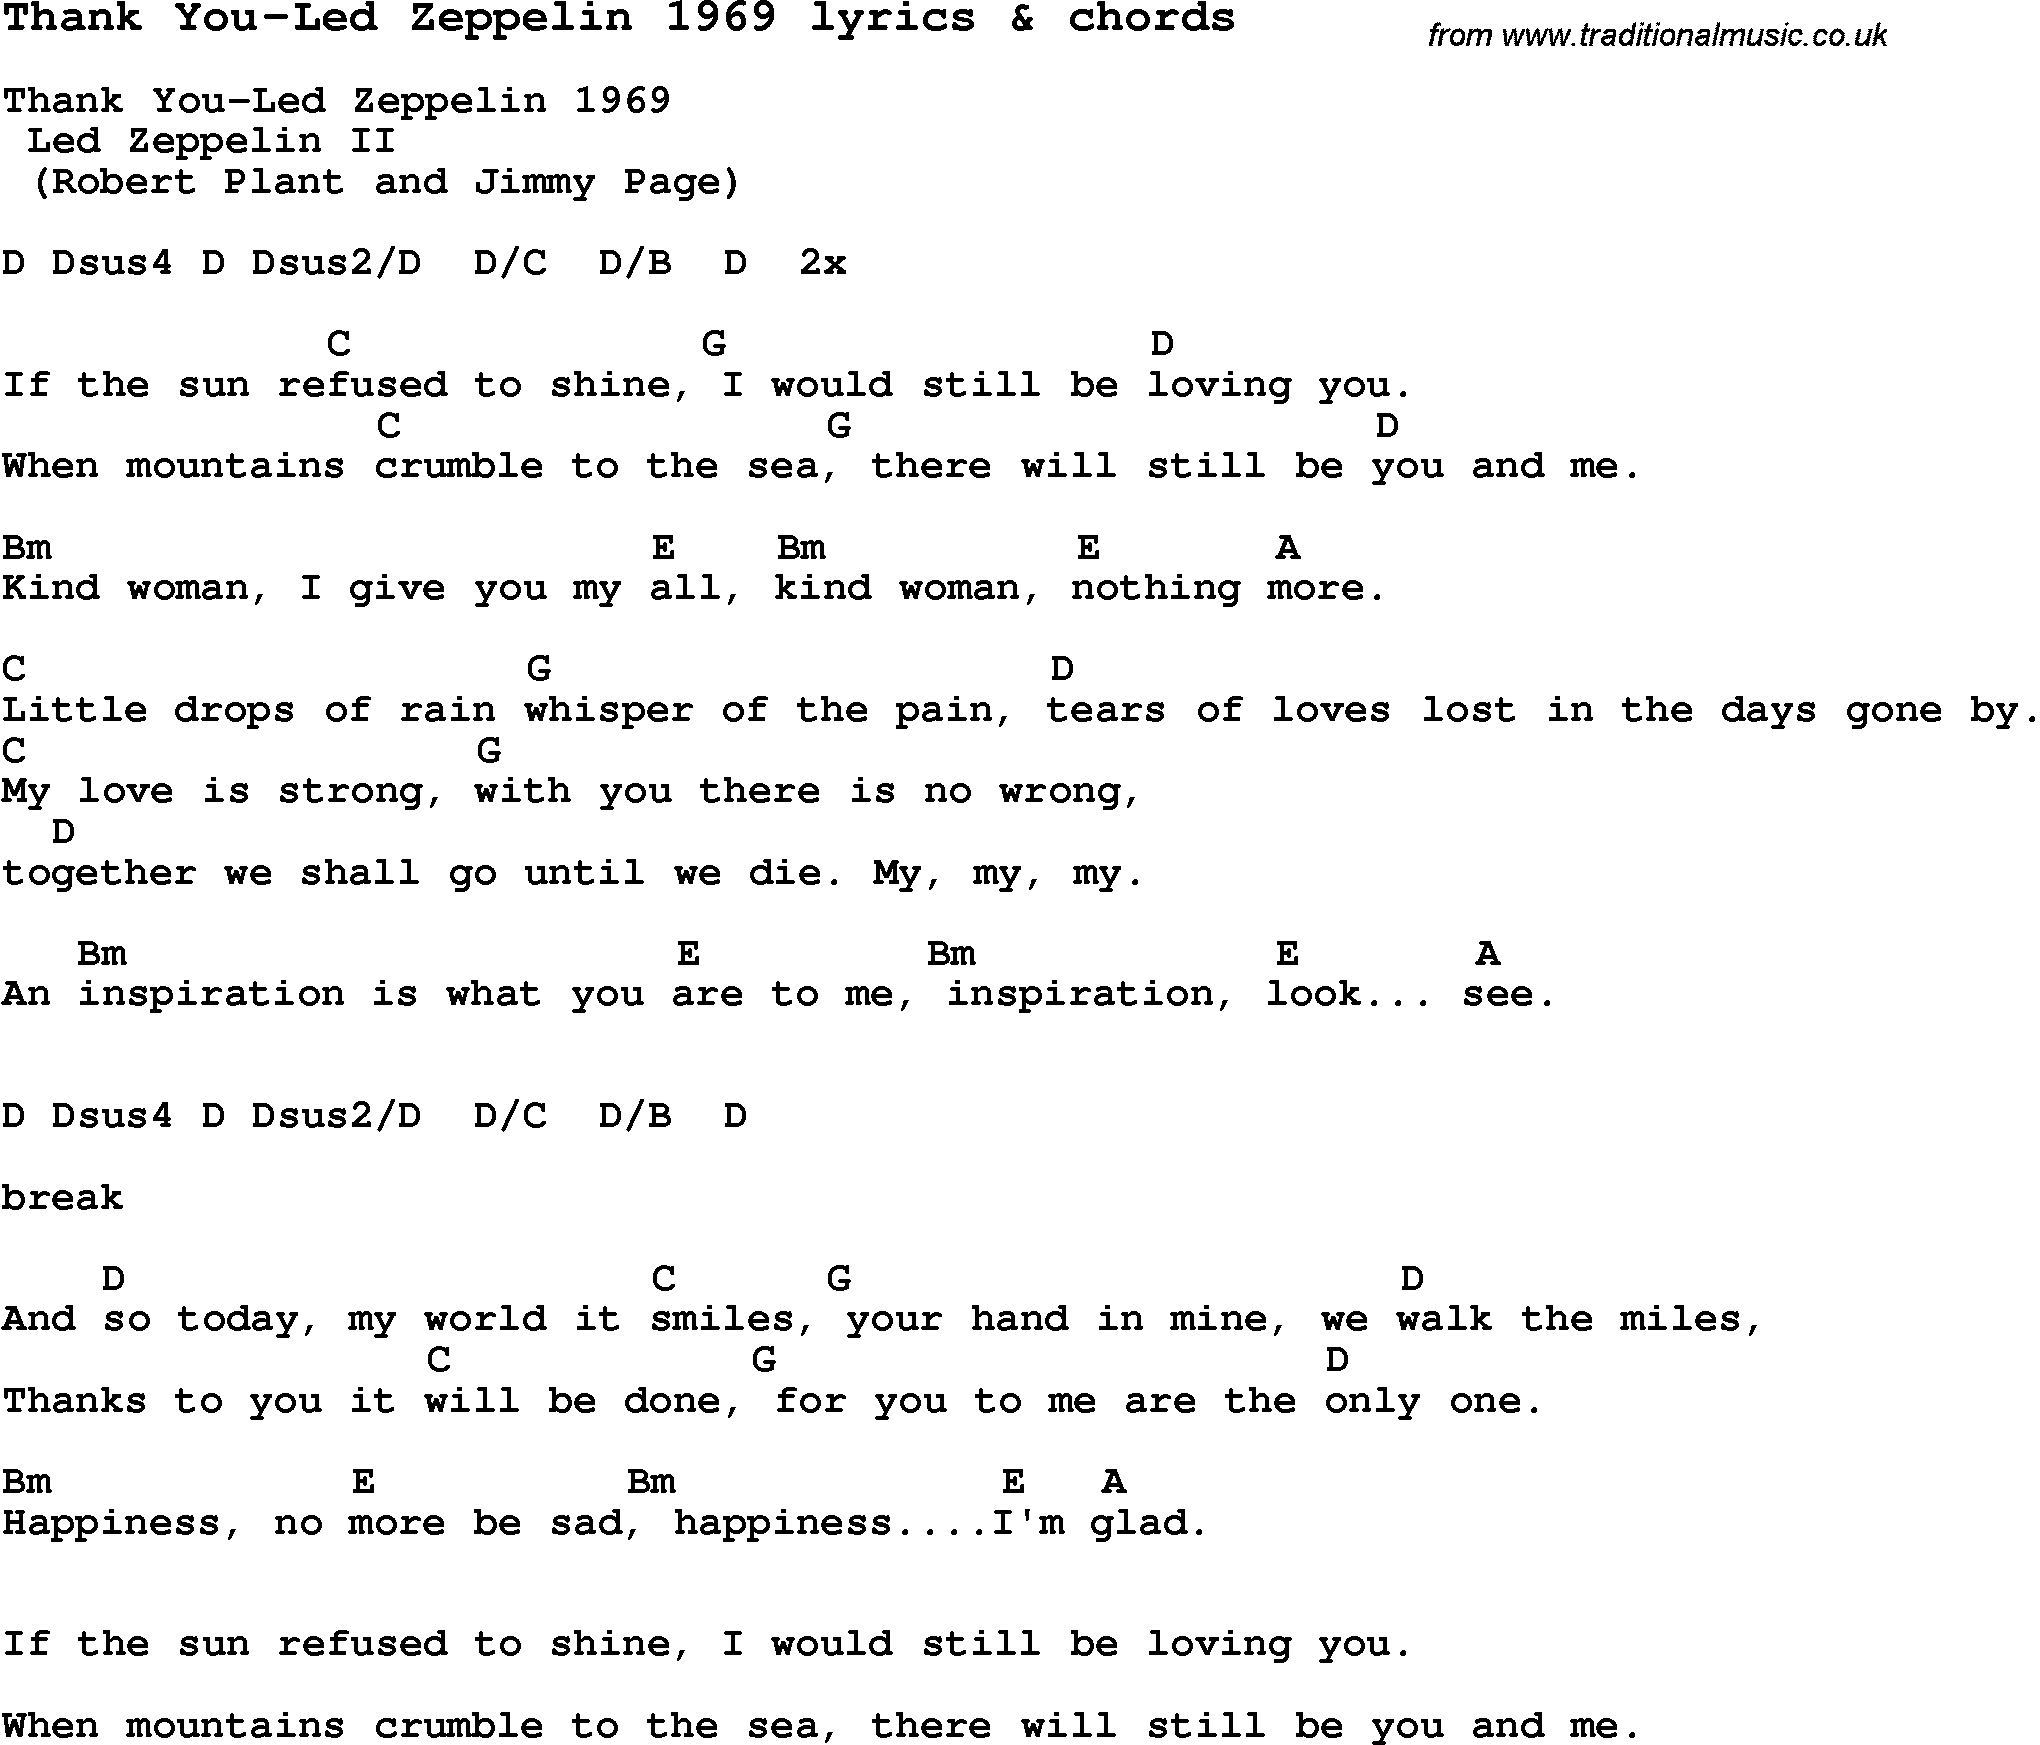 Love Song Lyrics for: Thank You-Led Zeppelin 1969 with chords for Ukulele, Guitar Banjo etc.